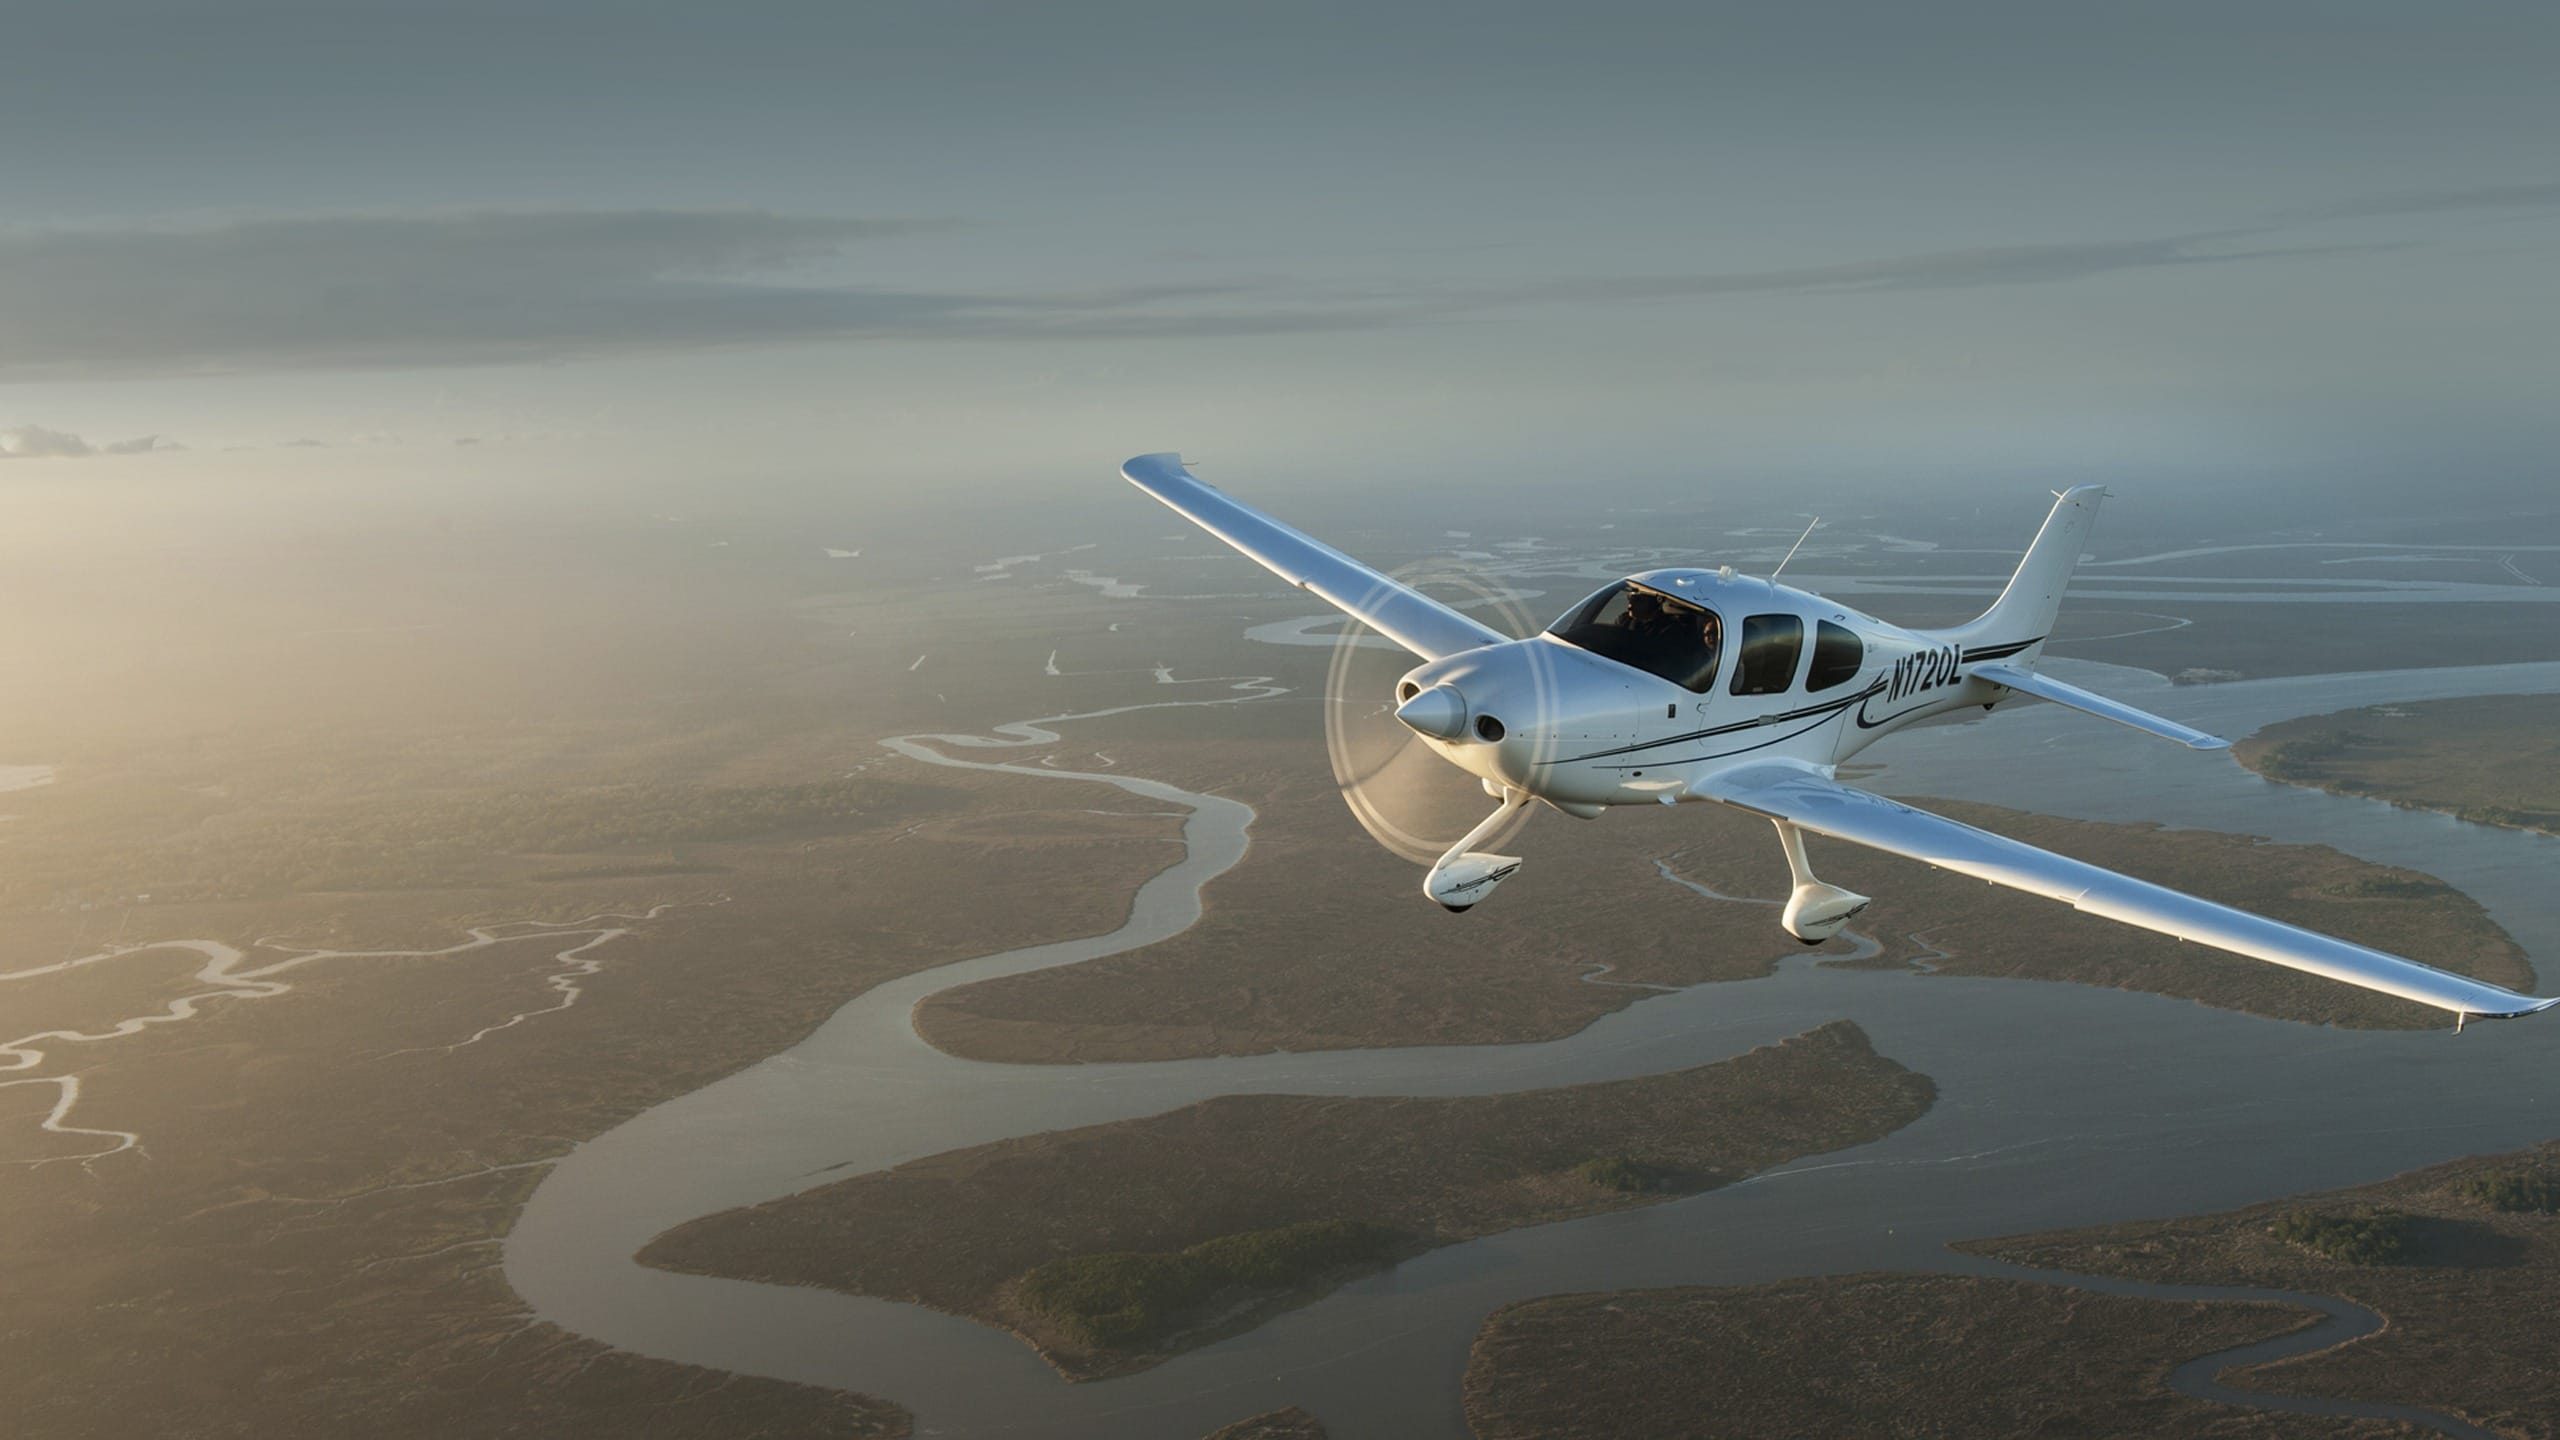 The Most Fuel-Efficient Aircraft